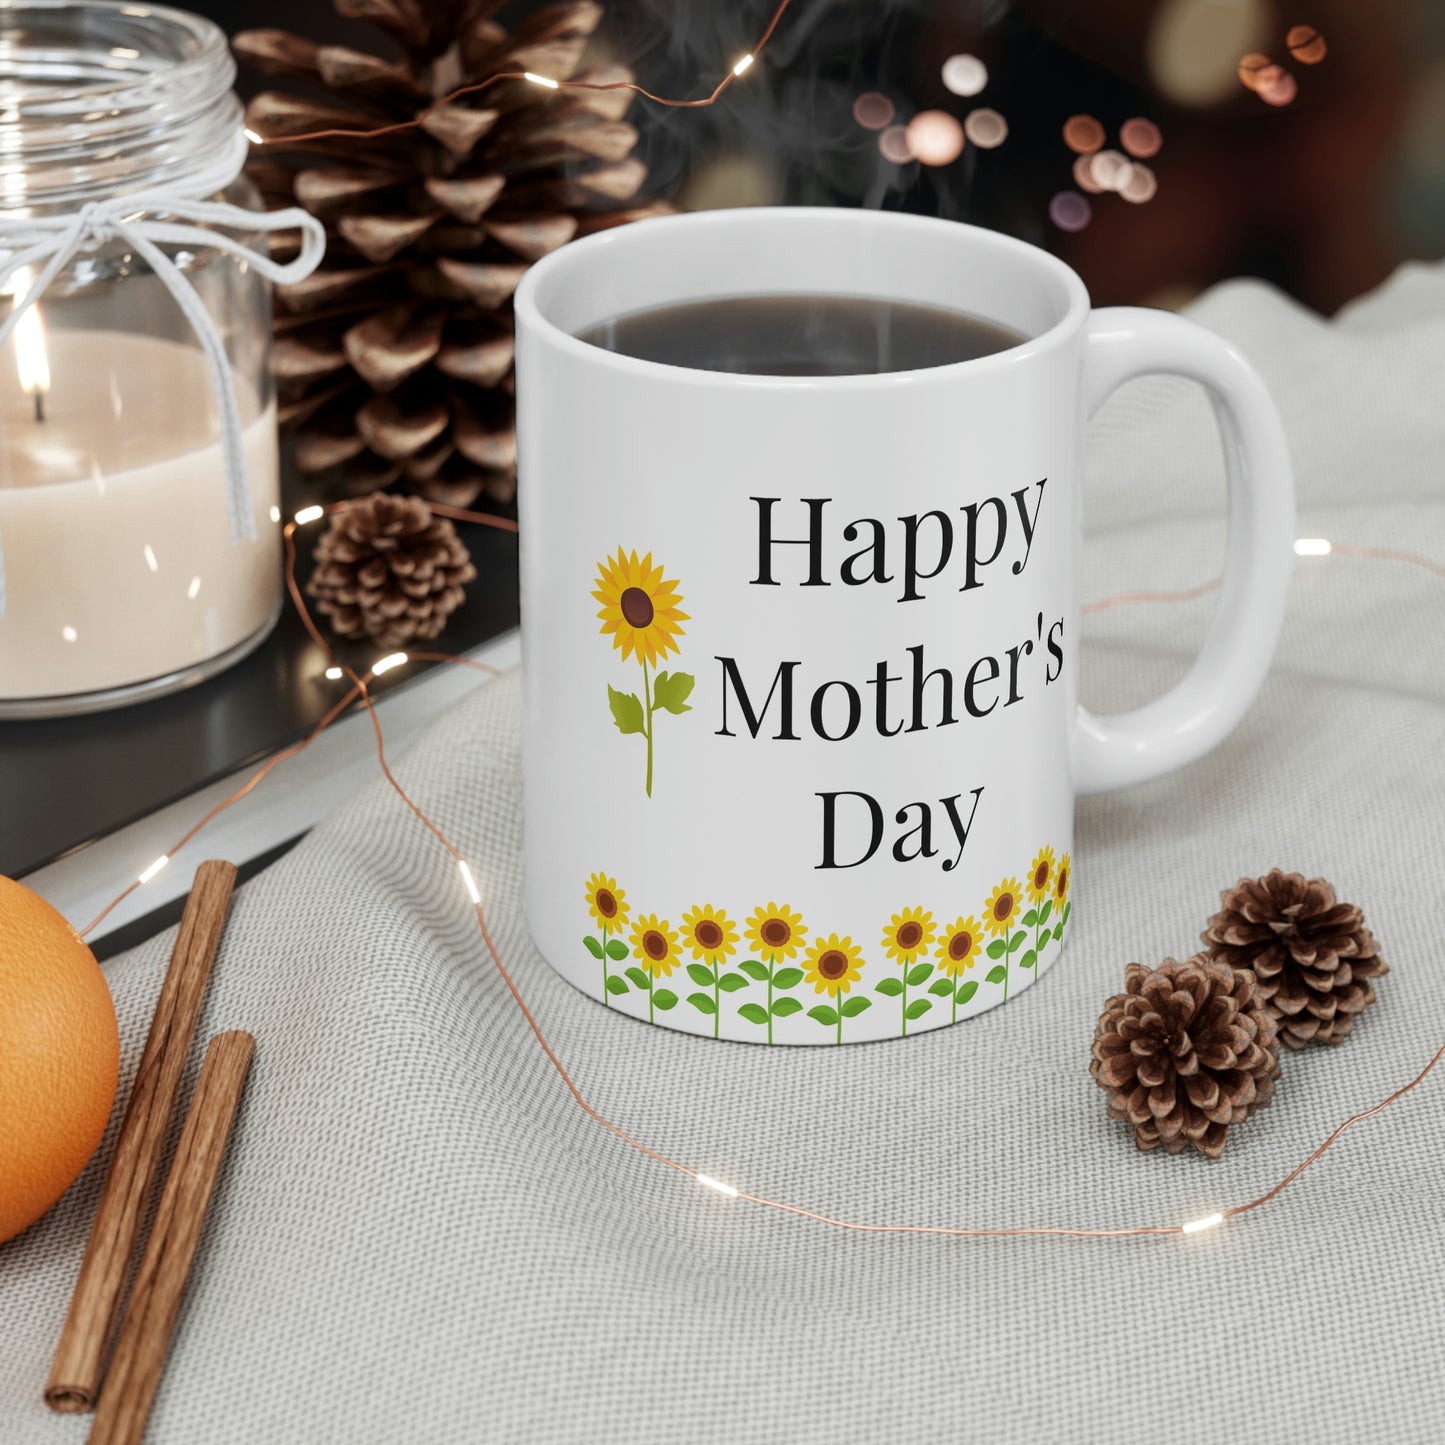 Happy Mother's Day Mug, Sunflower Mug, Mother's Day Gifts, Mother's Day Mugs, Mother's Day Sunflower Gift Ideas